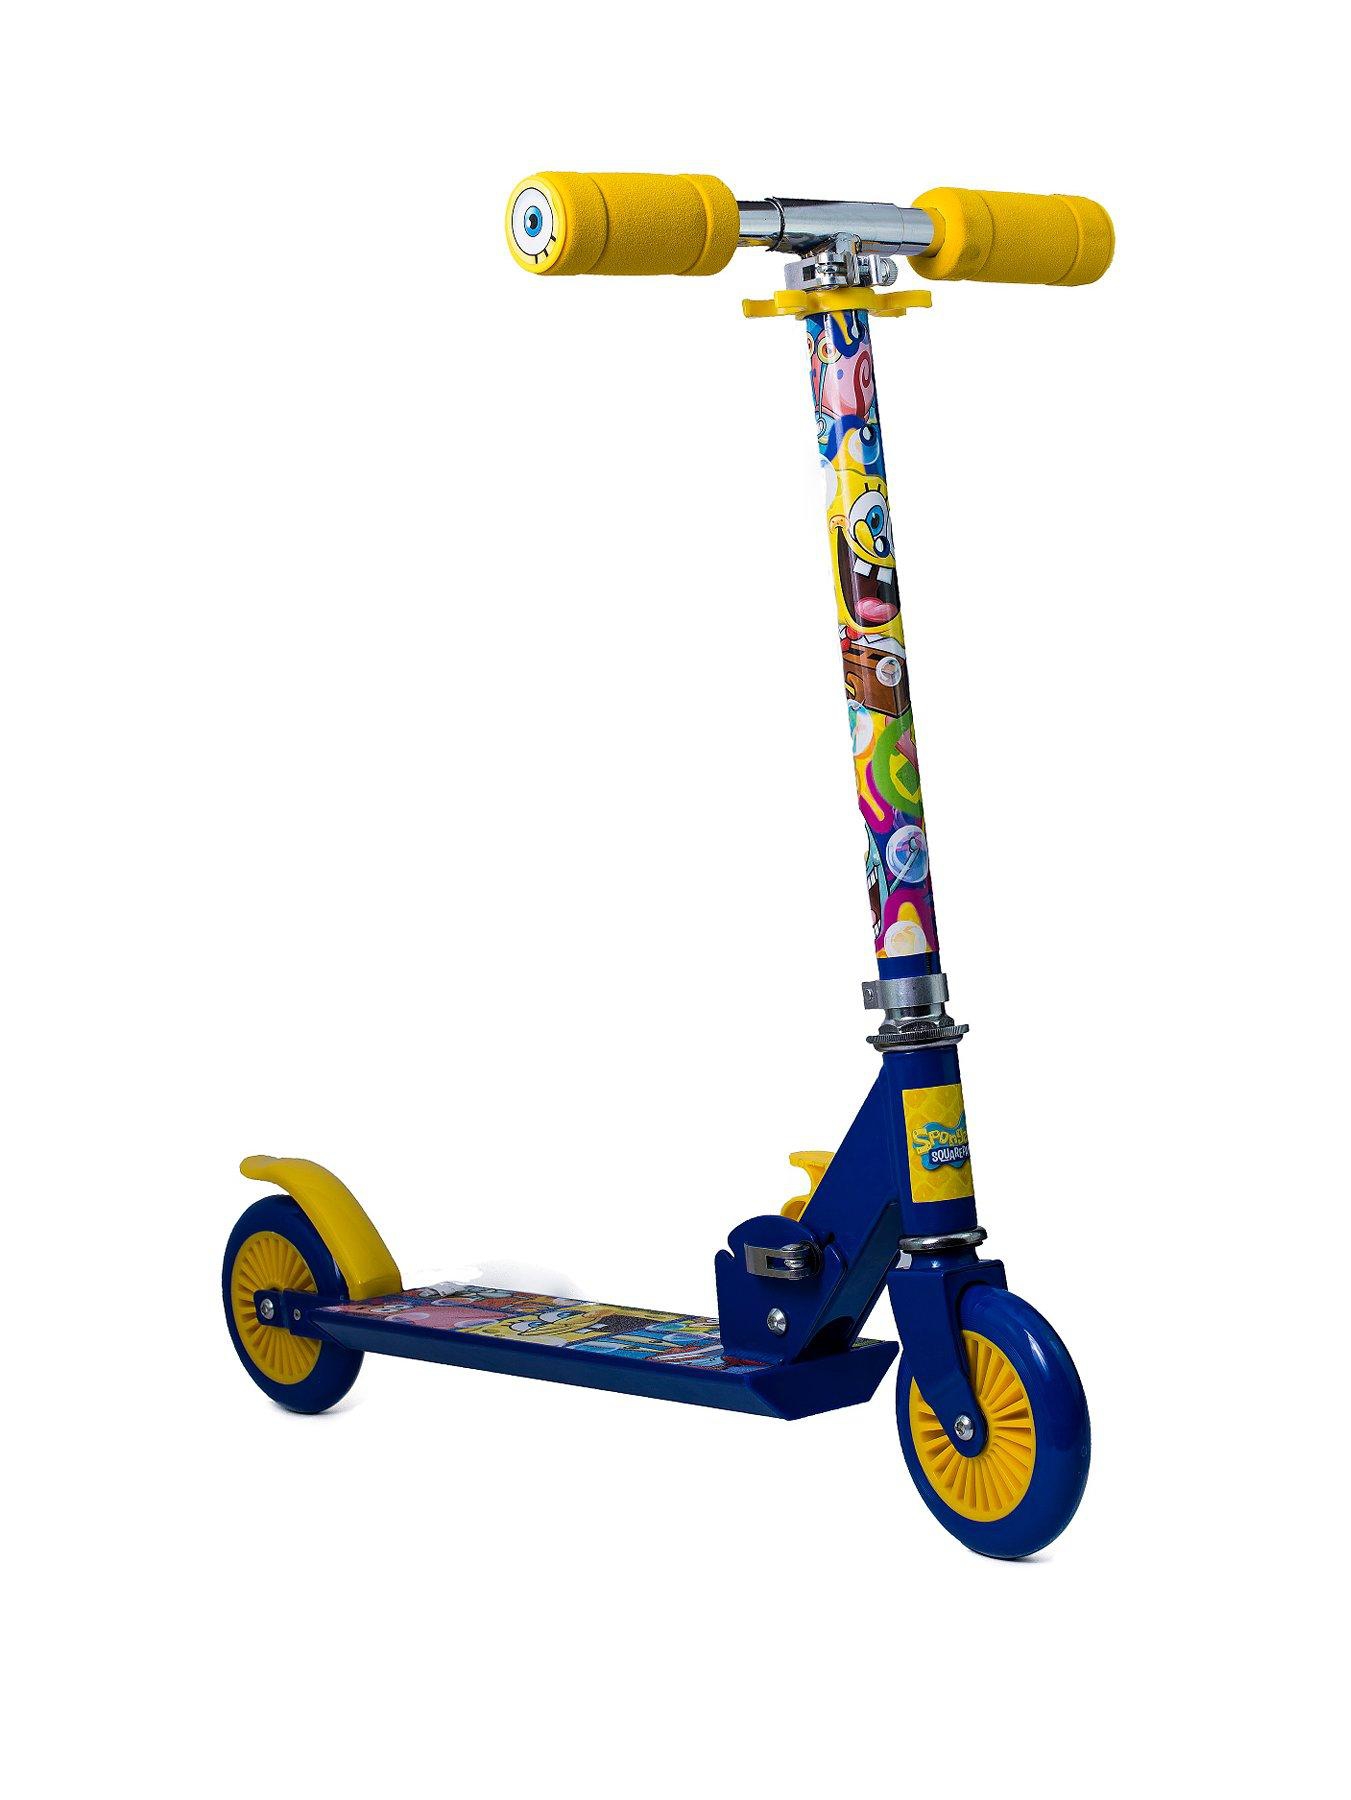 Spongebob Squarepants 2 Wheeled Scooter Toy